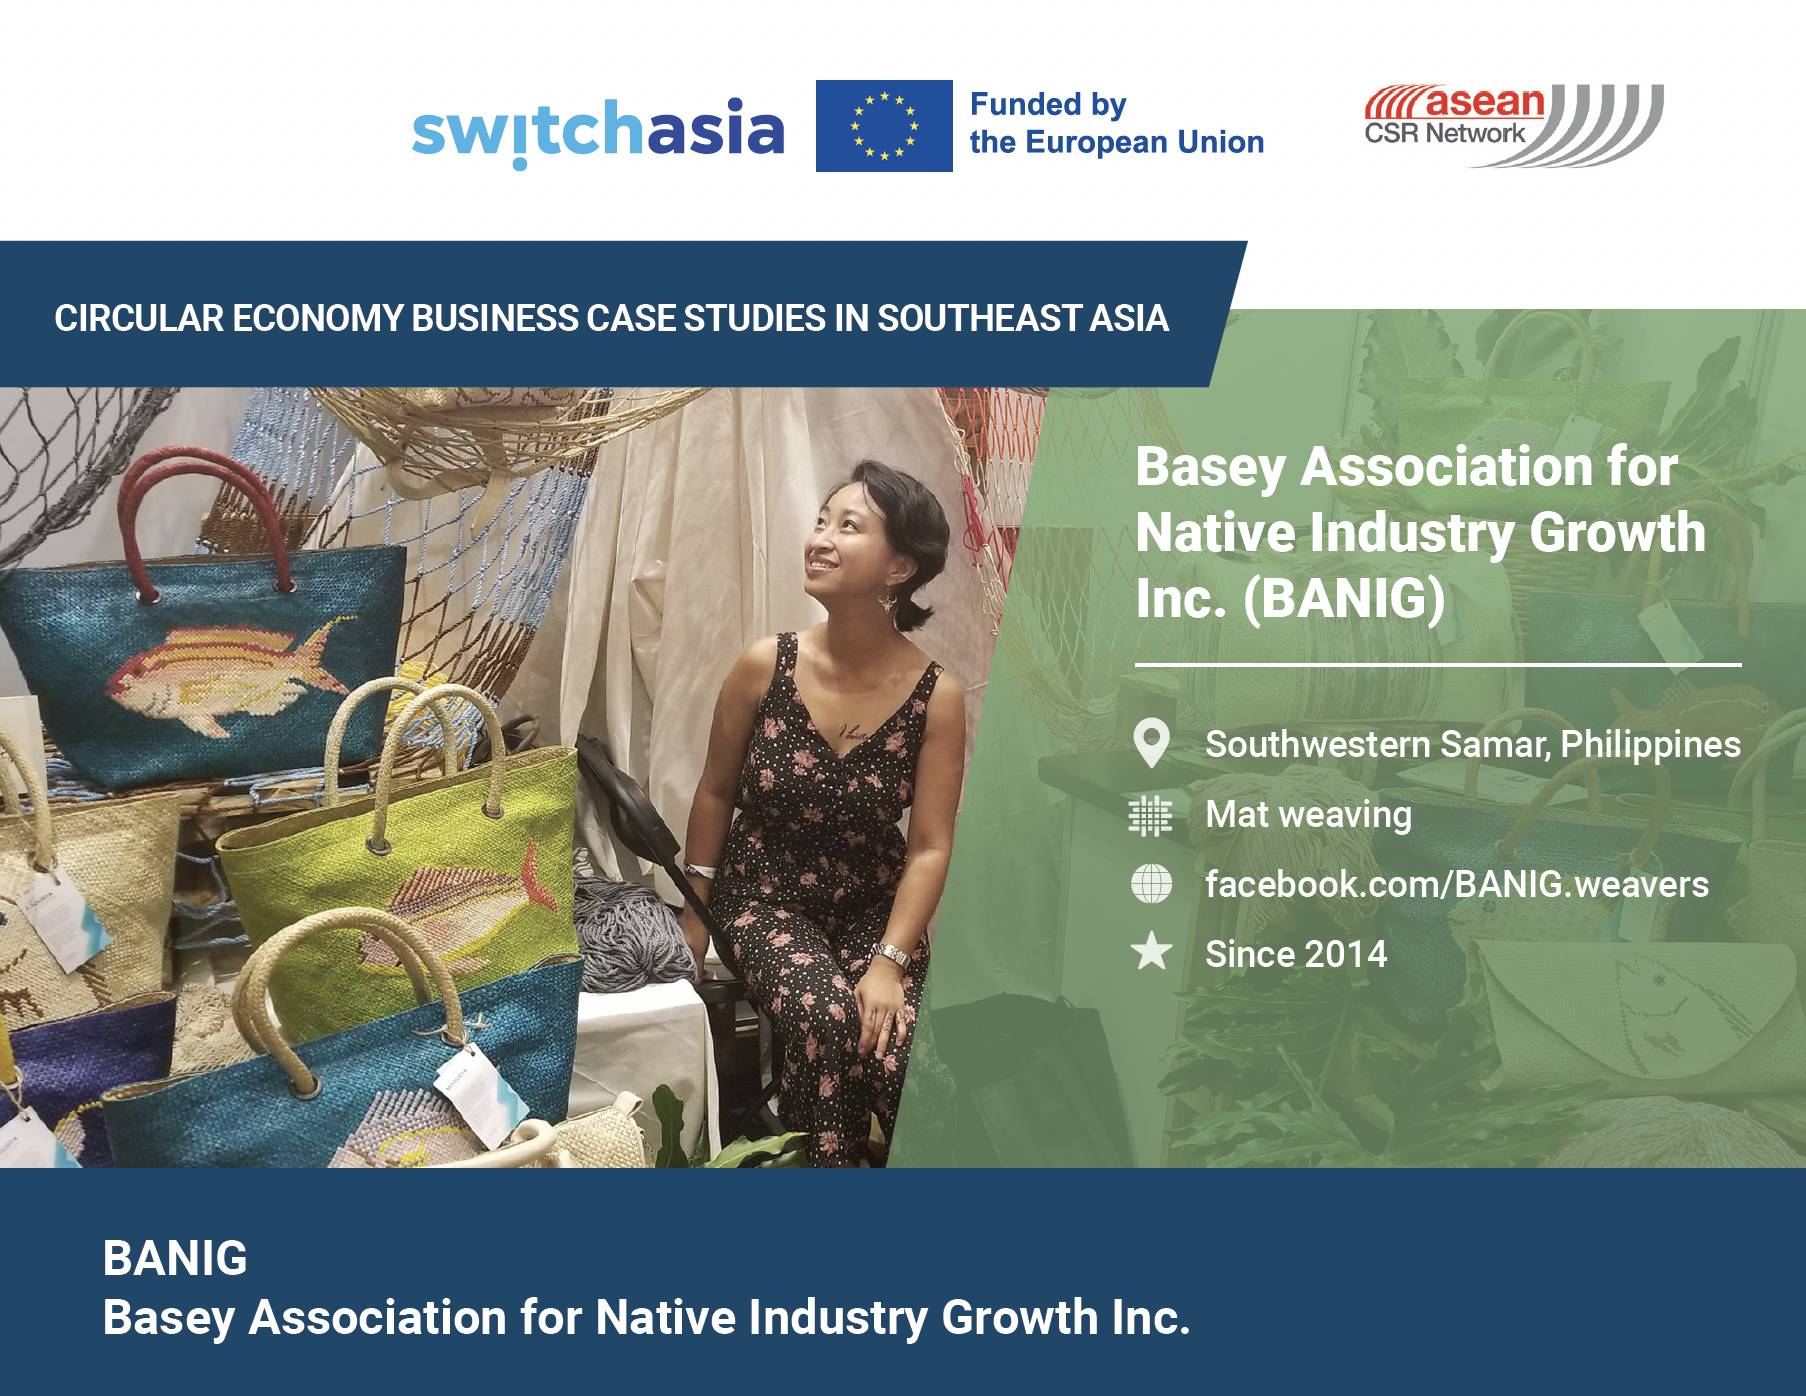 BANIG - Basey Association for Native Industry Growth Inc.